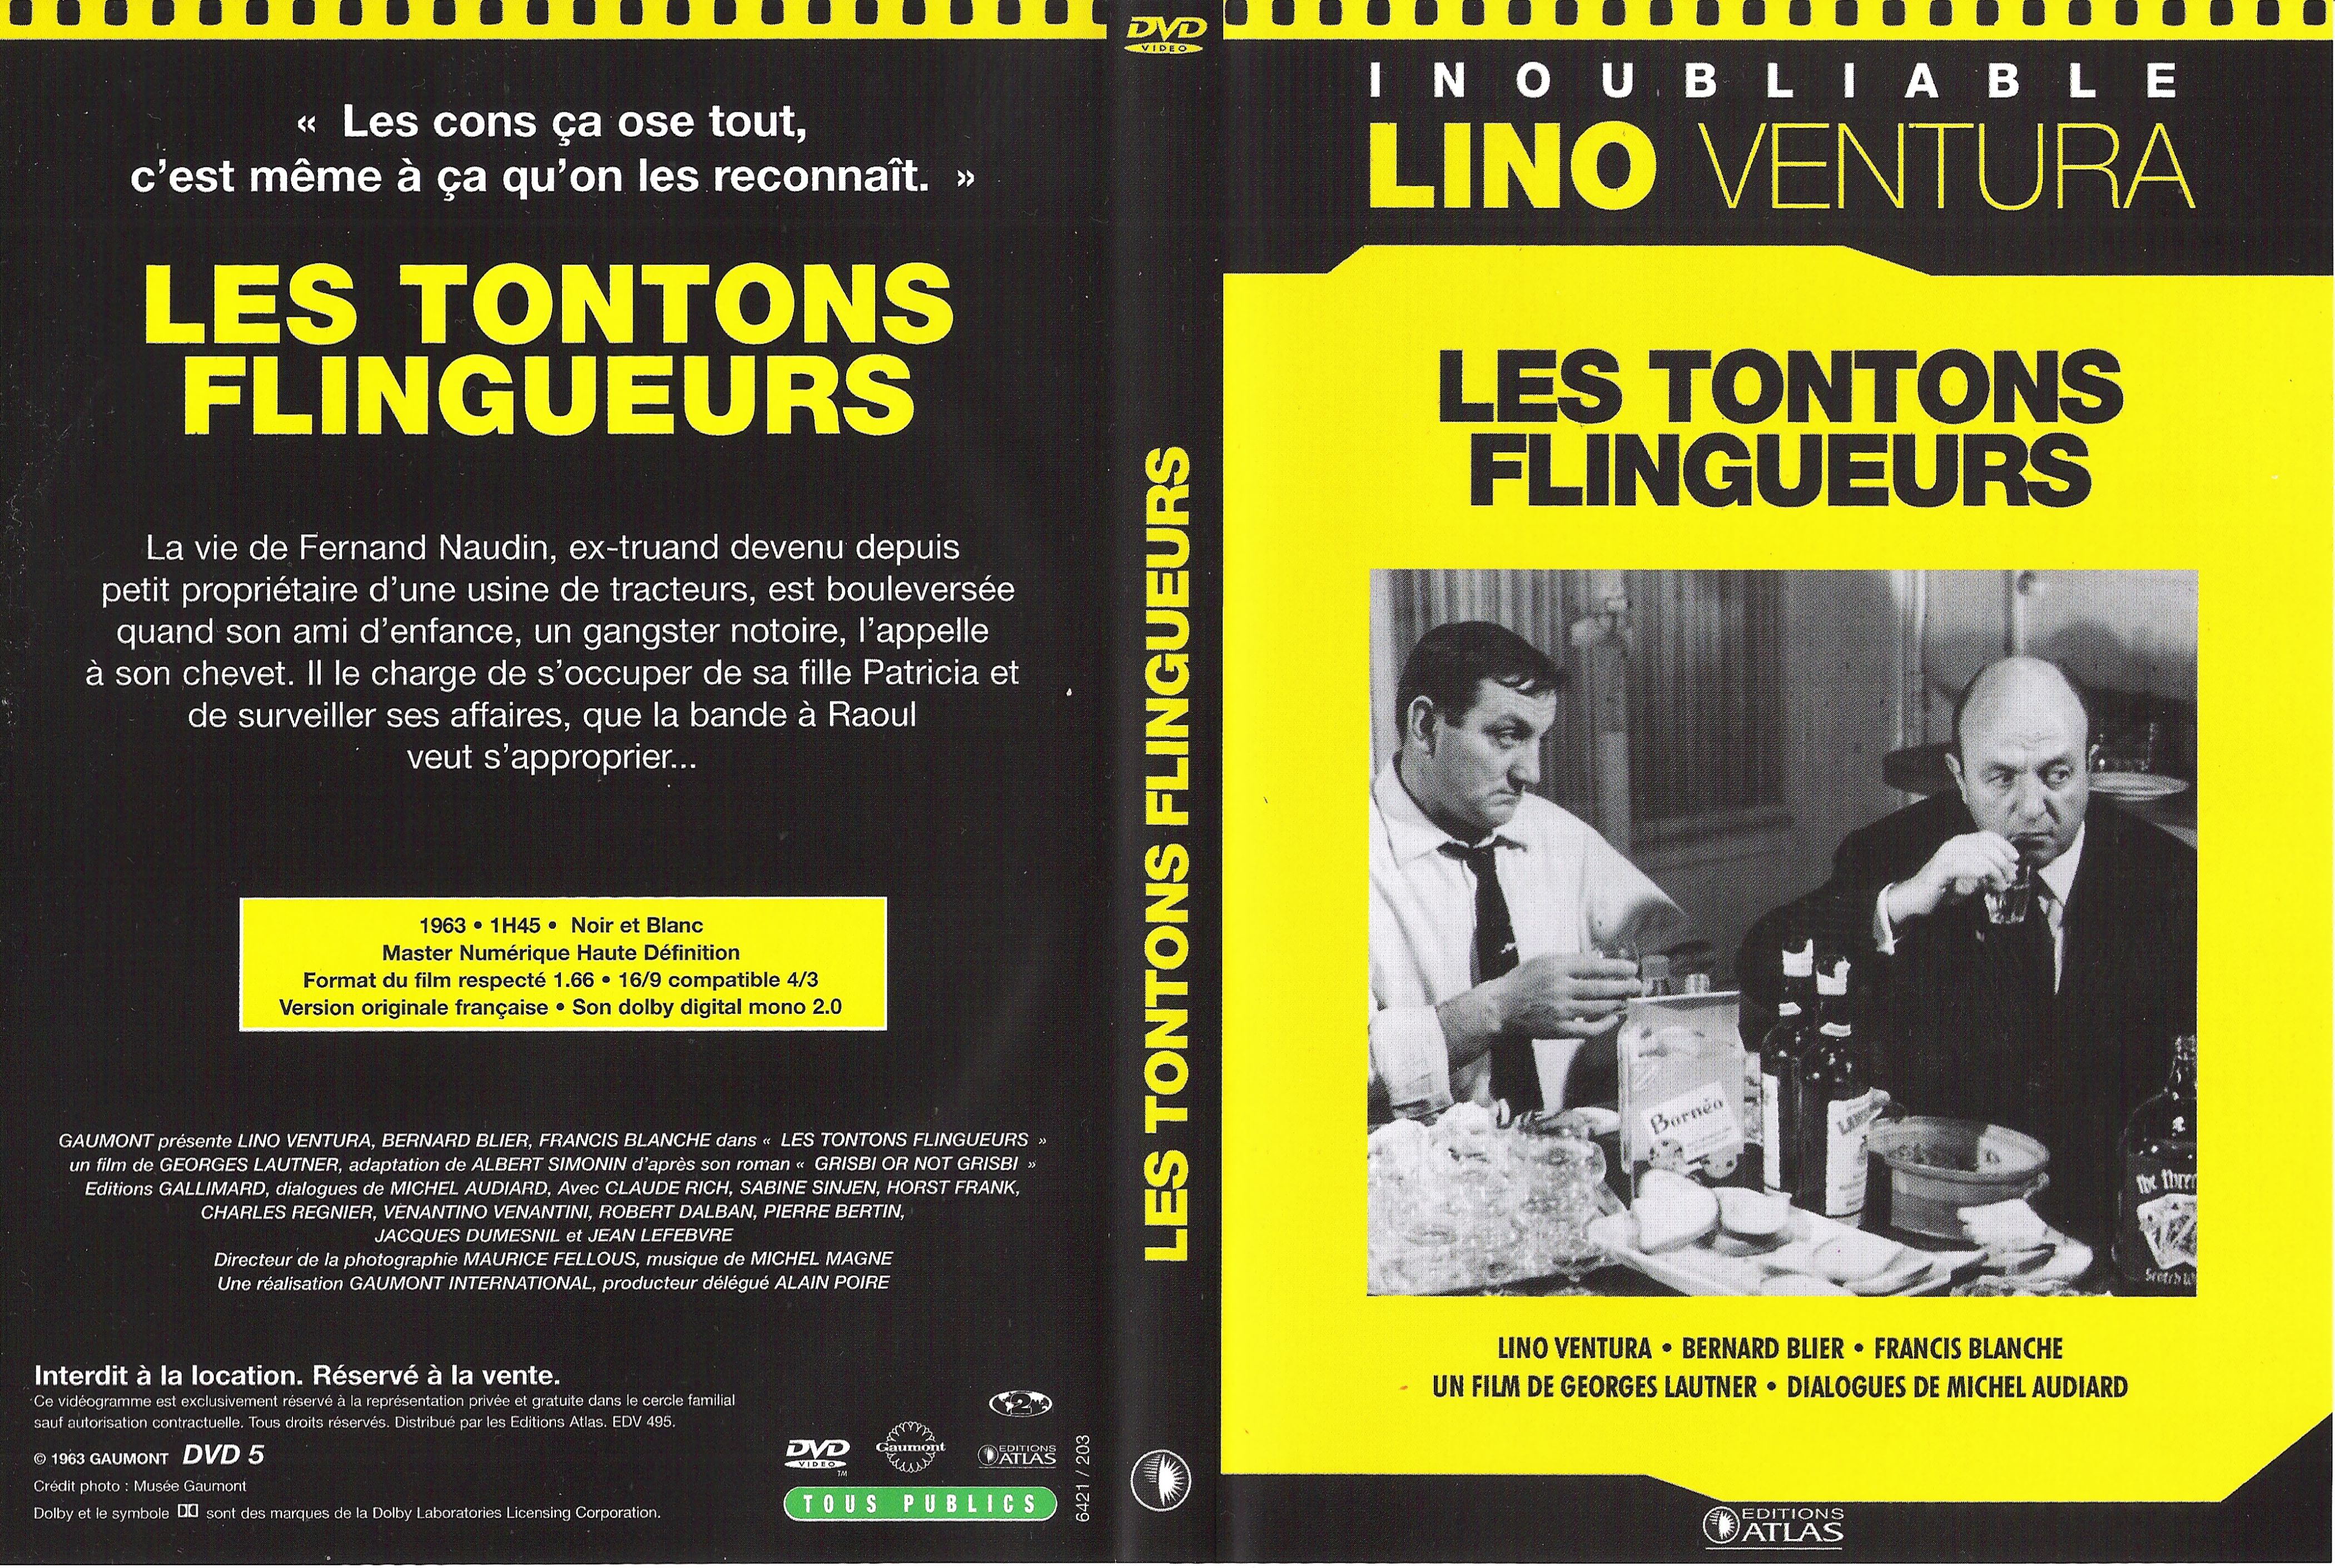 Jaquette DVD Les tontons flingueurs v2